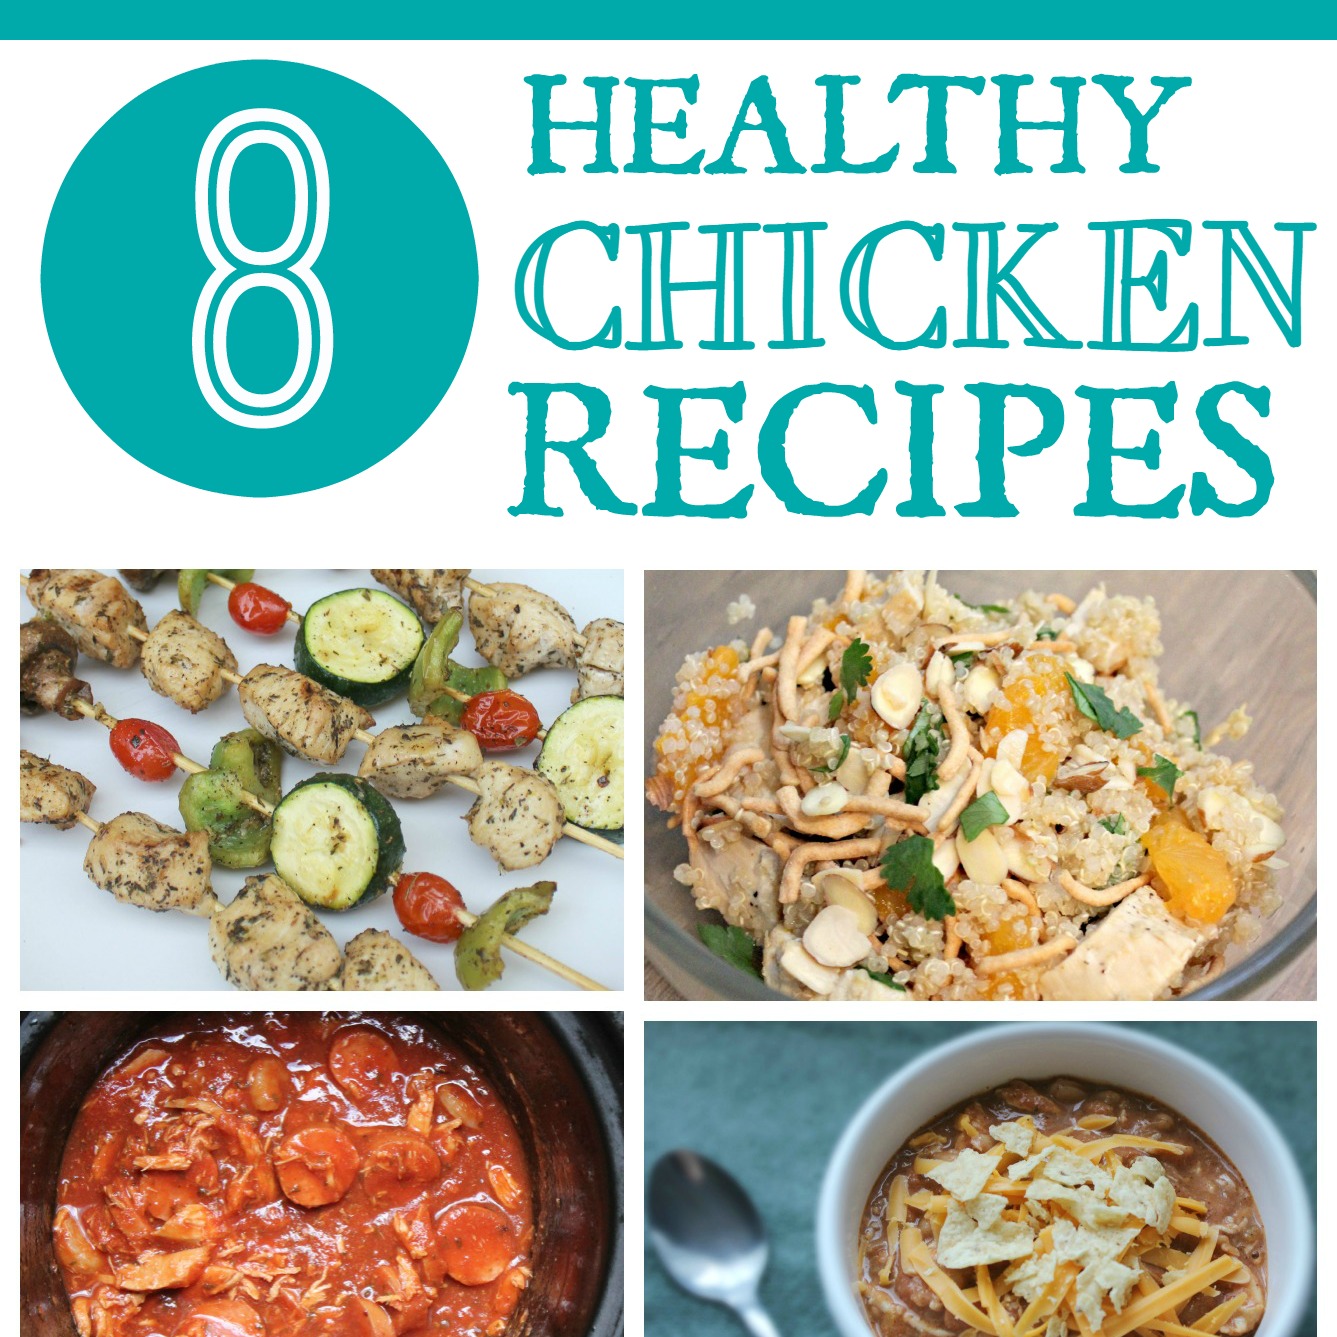 Recipe Roundup: 8 Healthy Chicken Recipes